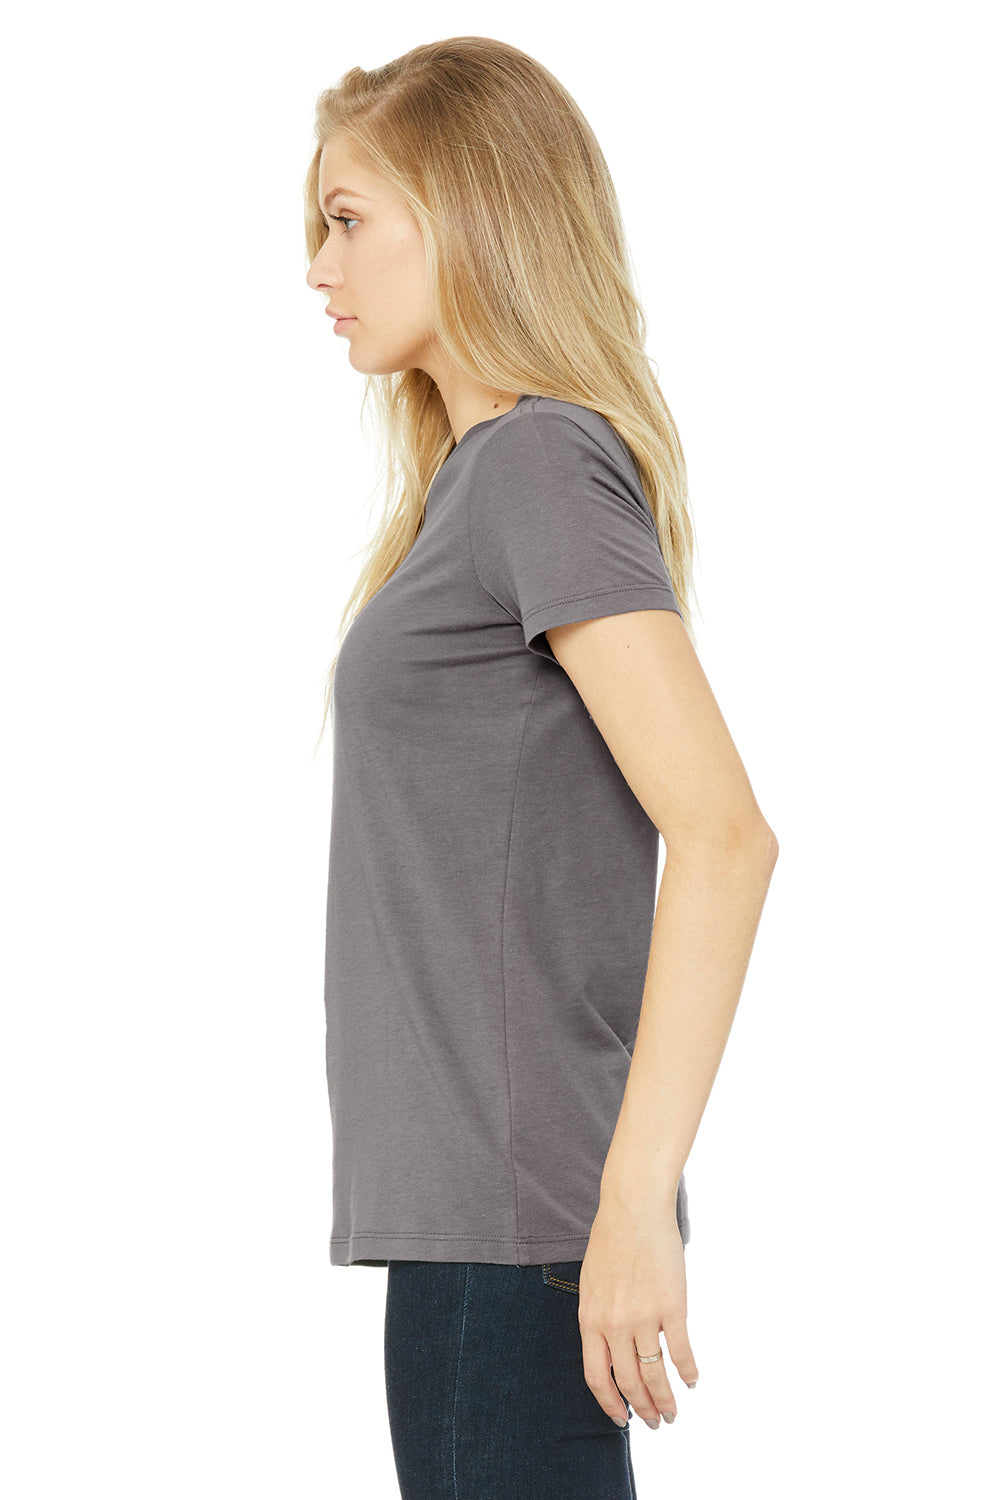 Bella + Canvas 6004 Womens The Favorite Short Sleeve Crewneck T-Shirt Storm Grey Side